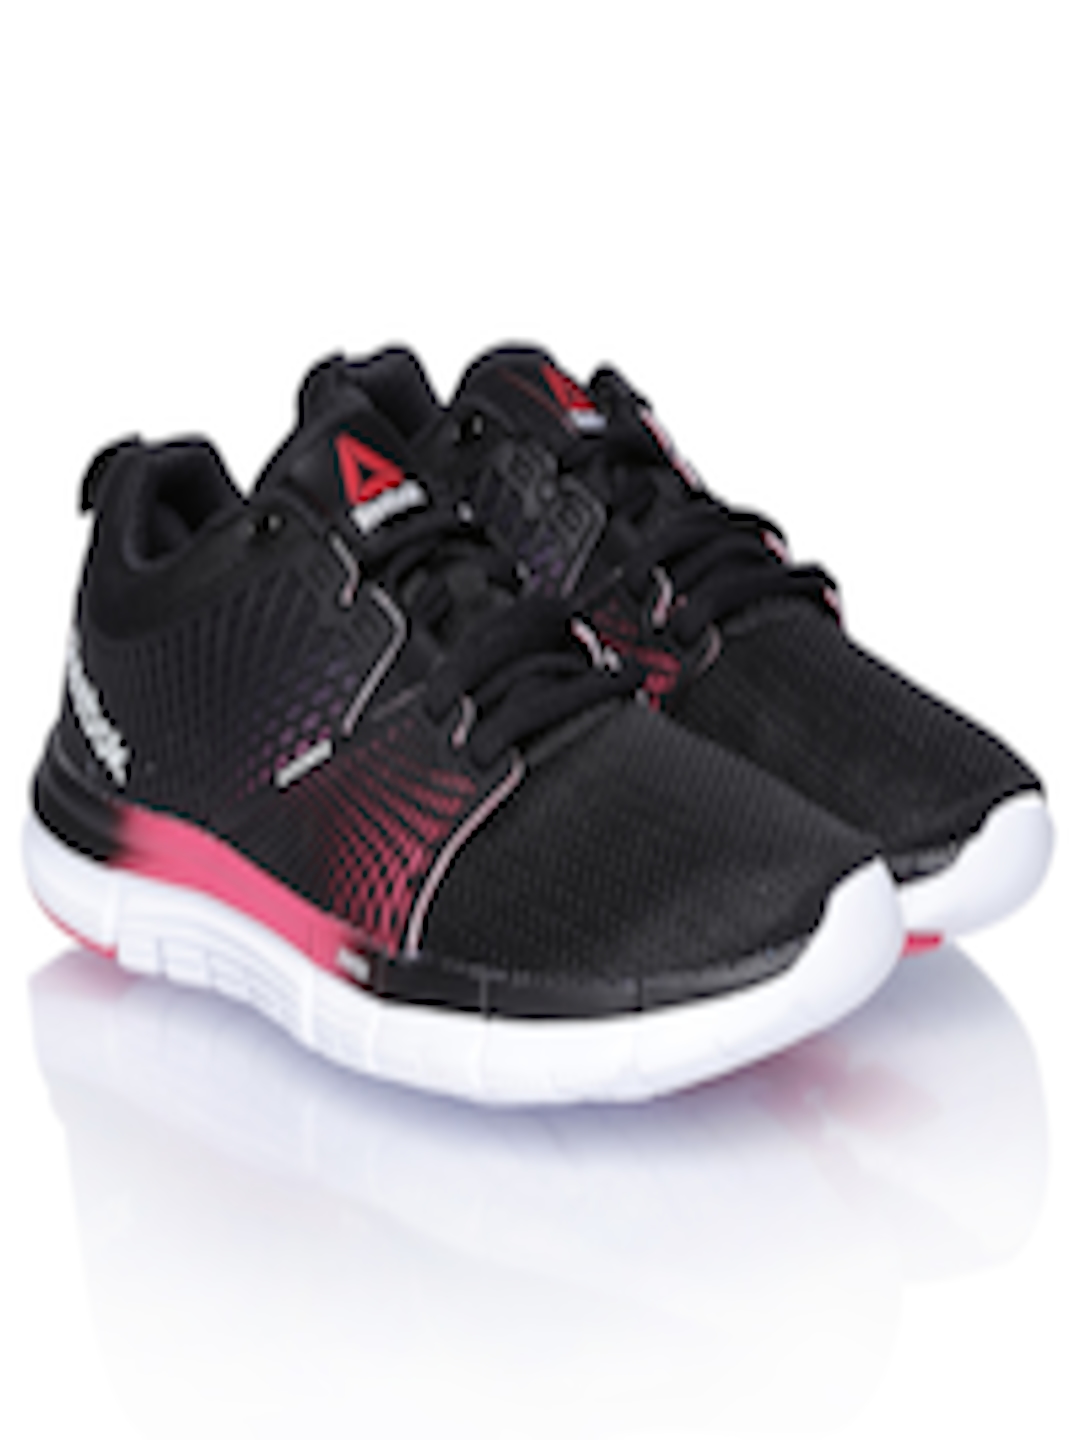 Buy Reebok Women Black Zquick Dash Running Shoes - Sports Shoes for ...